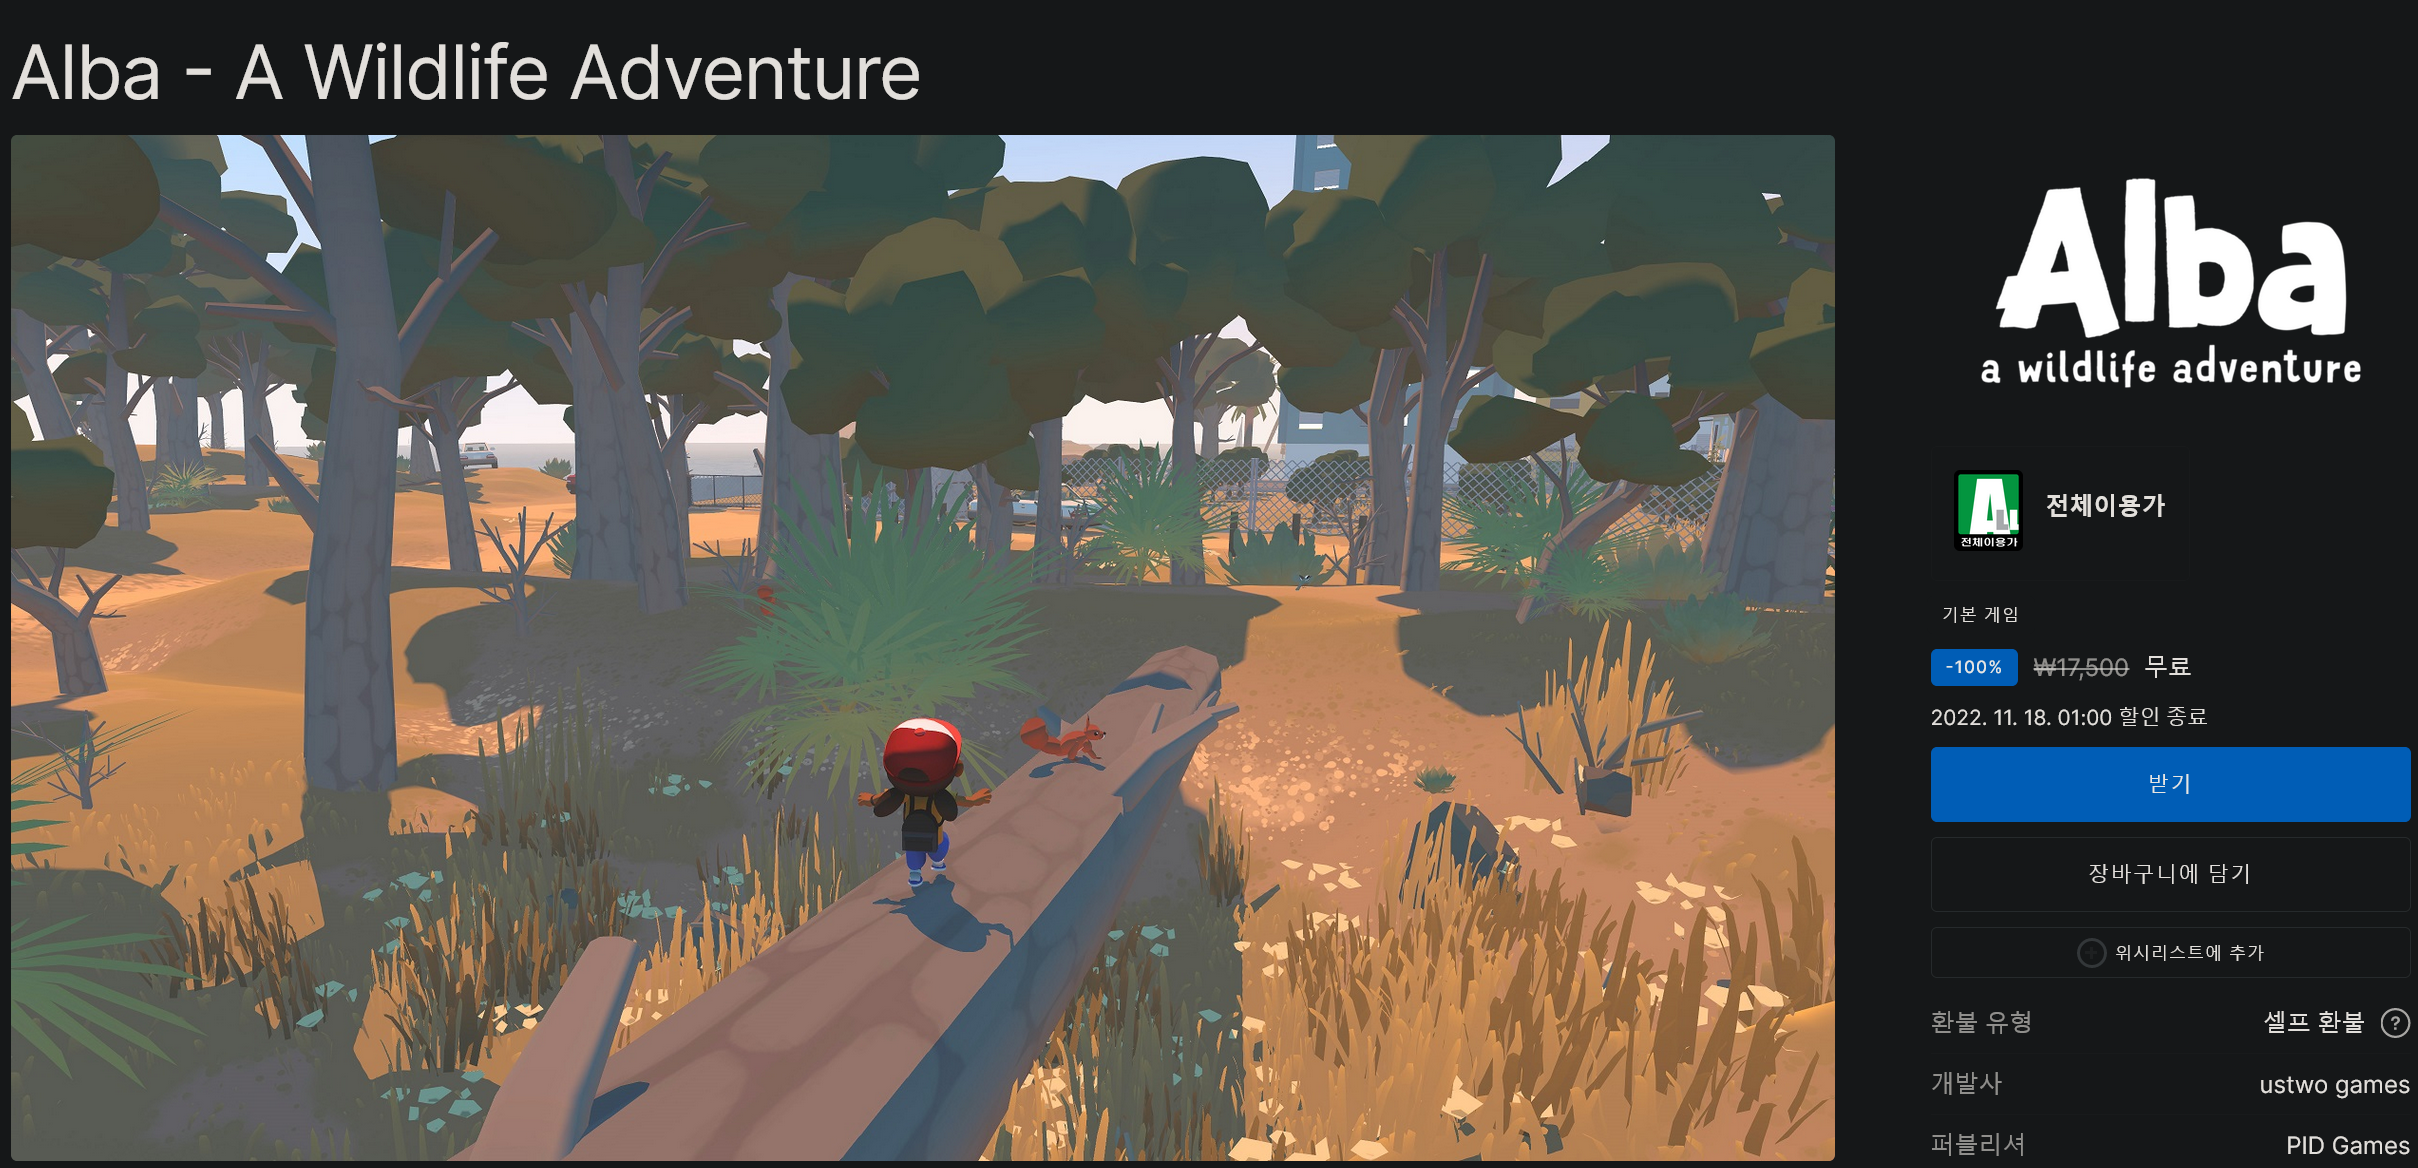 Screenshot 2022-11-11 at 01-57-12 Alba - A Wildlife Adventure 오늘 다운로드 및 구매 - Epic Games Store.png